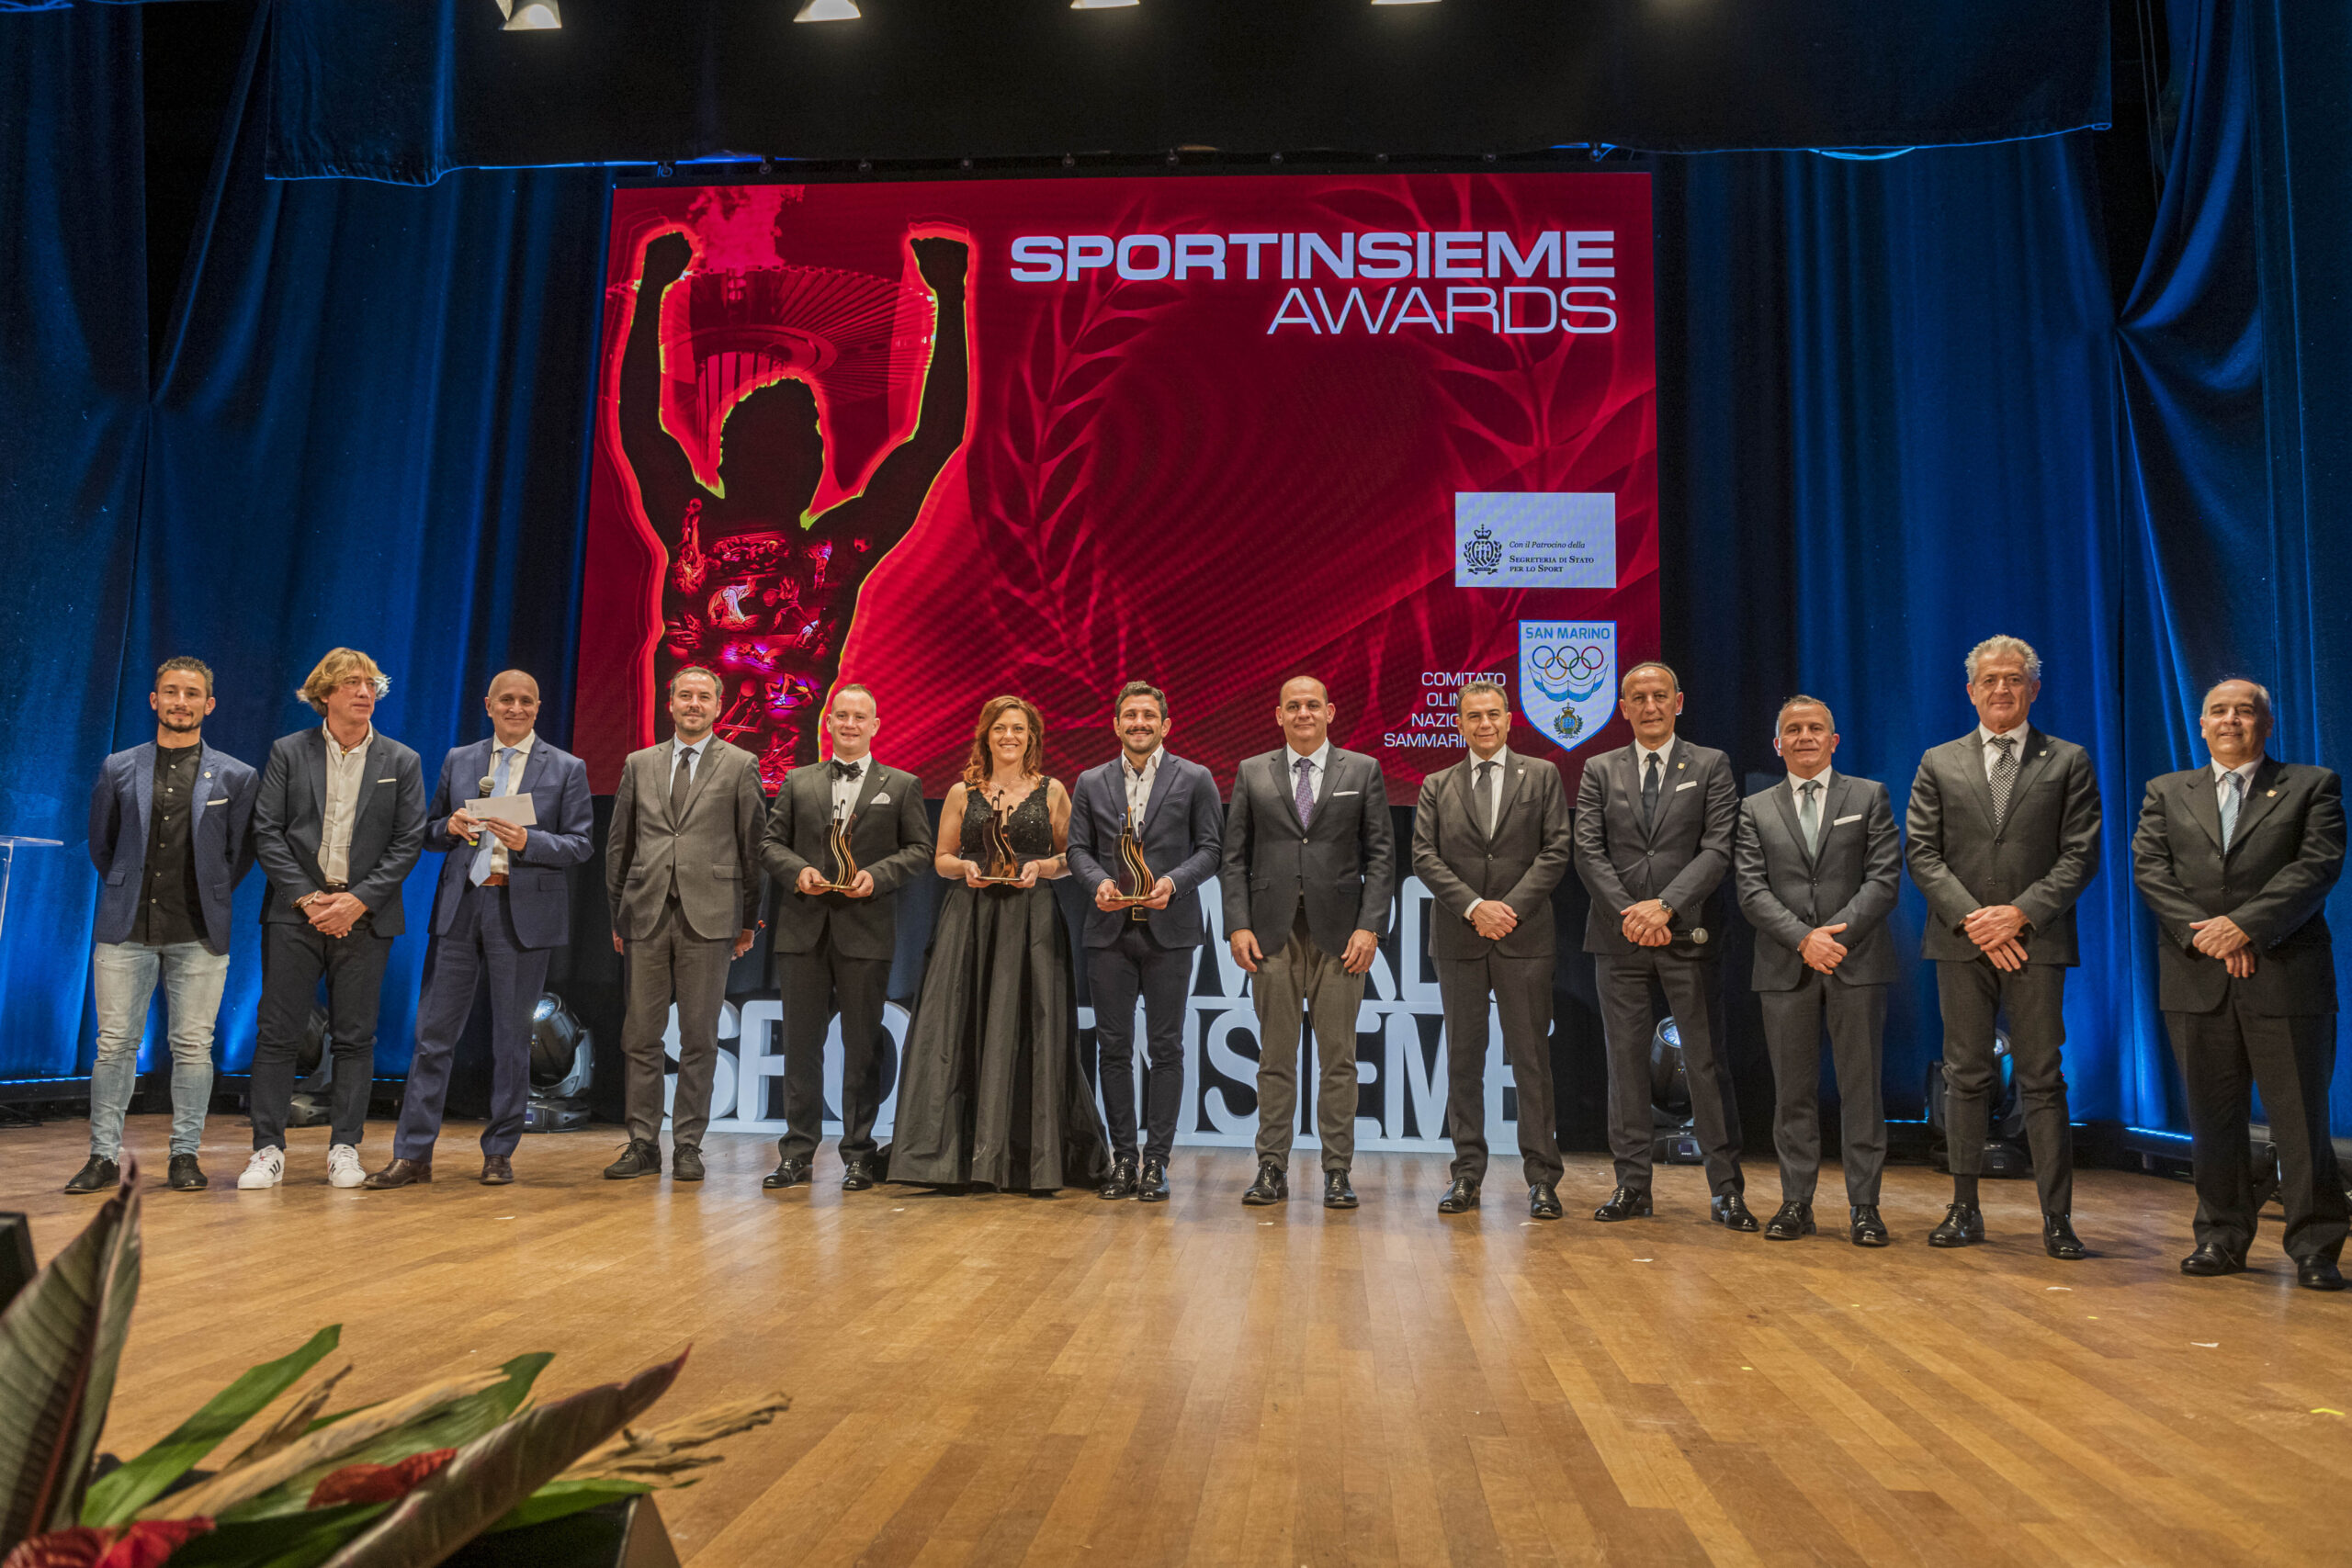 San Marino. Venerdì sera a Sportinsieme Awards si premiano gli atleti sammarinesi